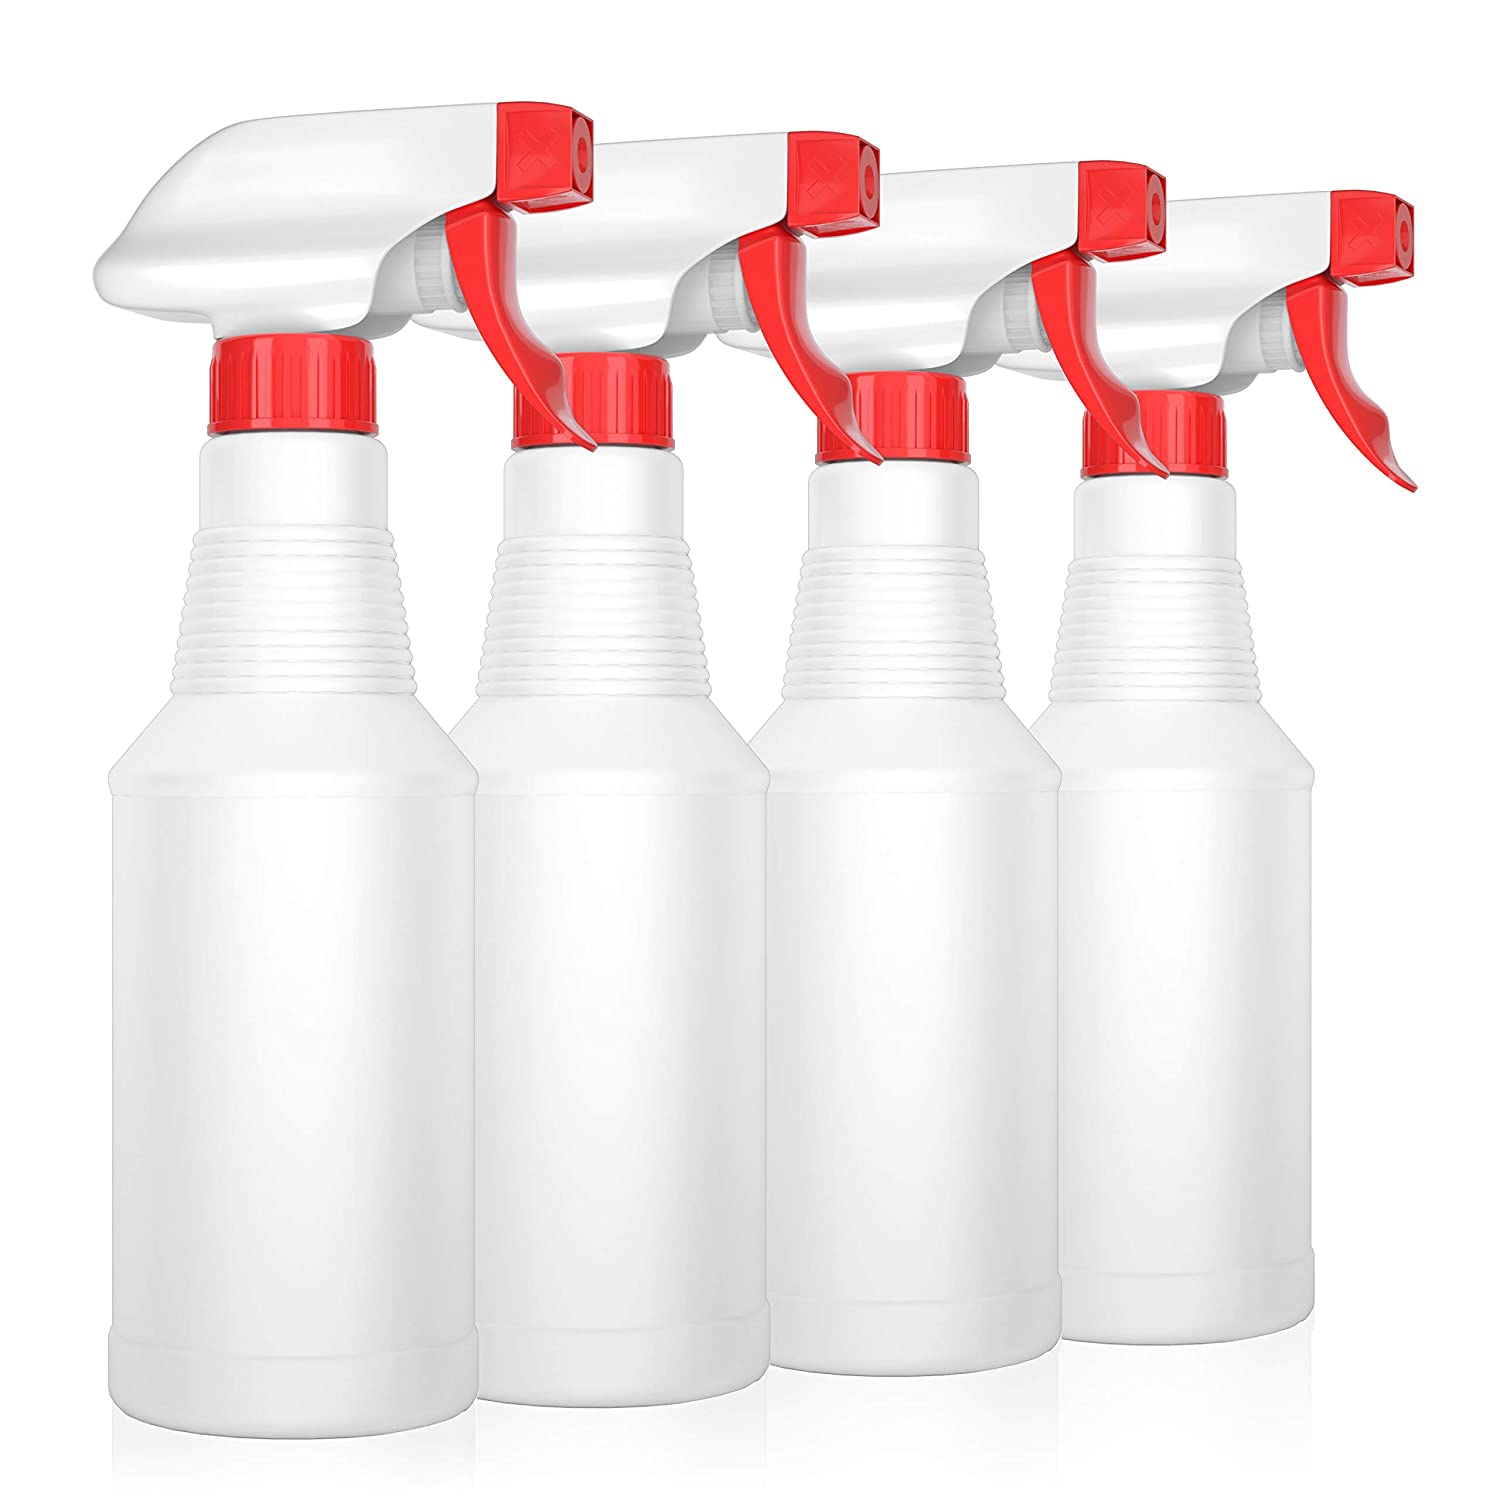 LiBa Adjustable Nozzle Spray Bottle, 4-Pack